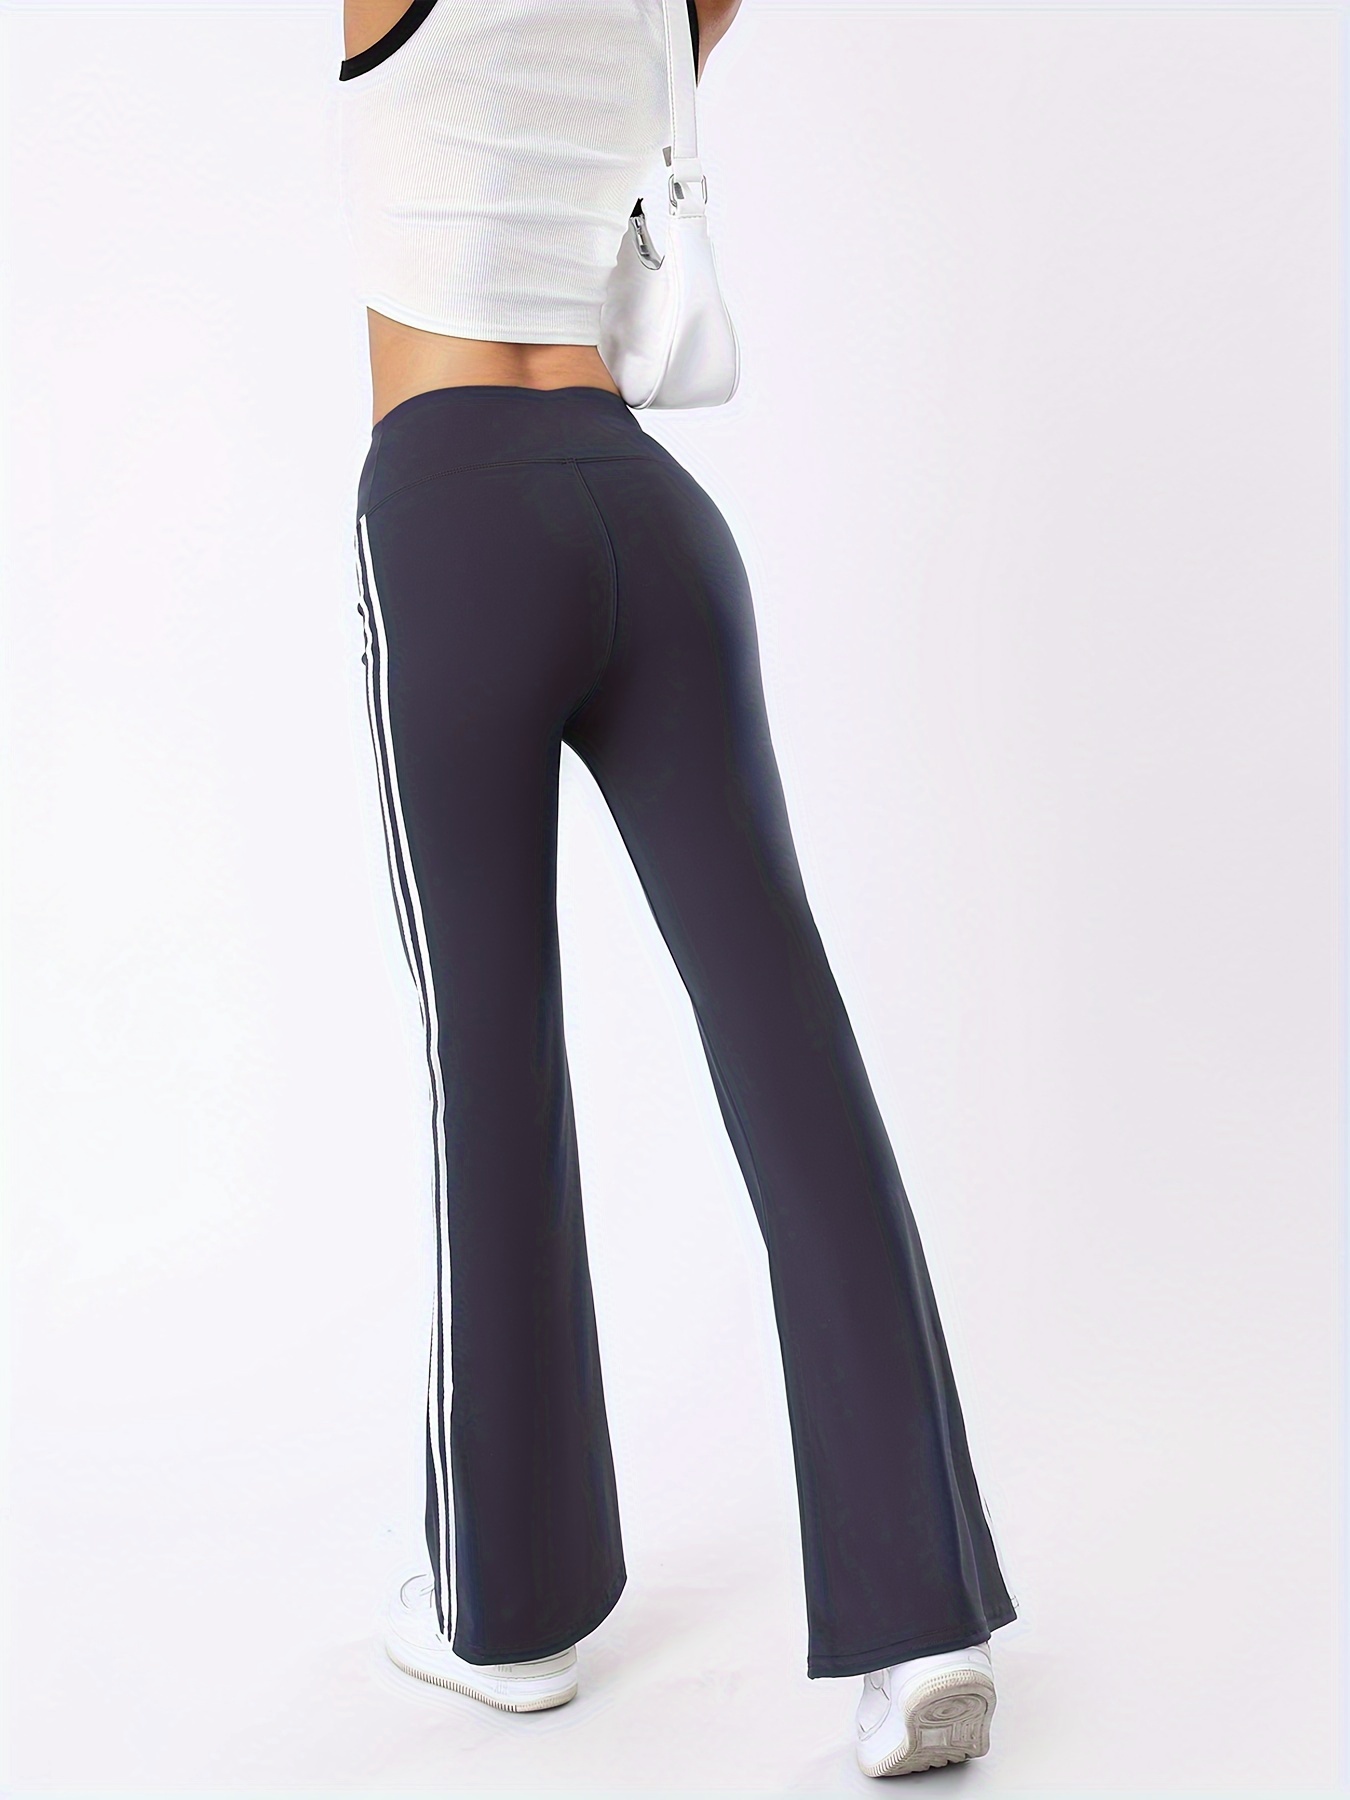 Vanya Fashion Half Stripe Yoga Pants for Women High Waisted